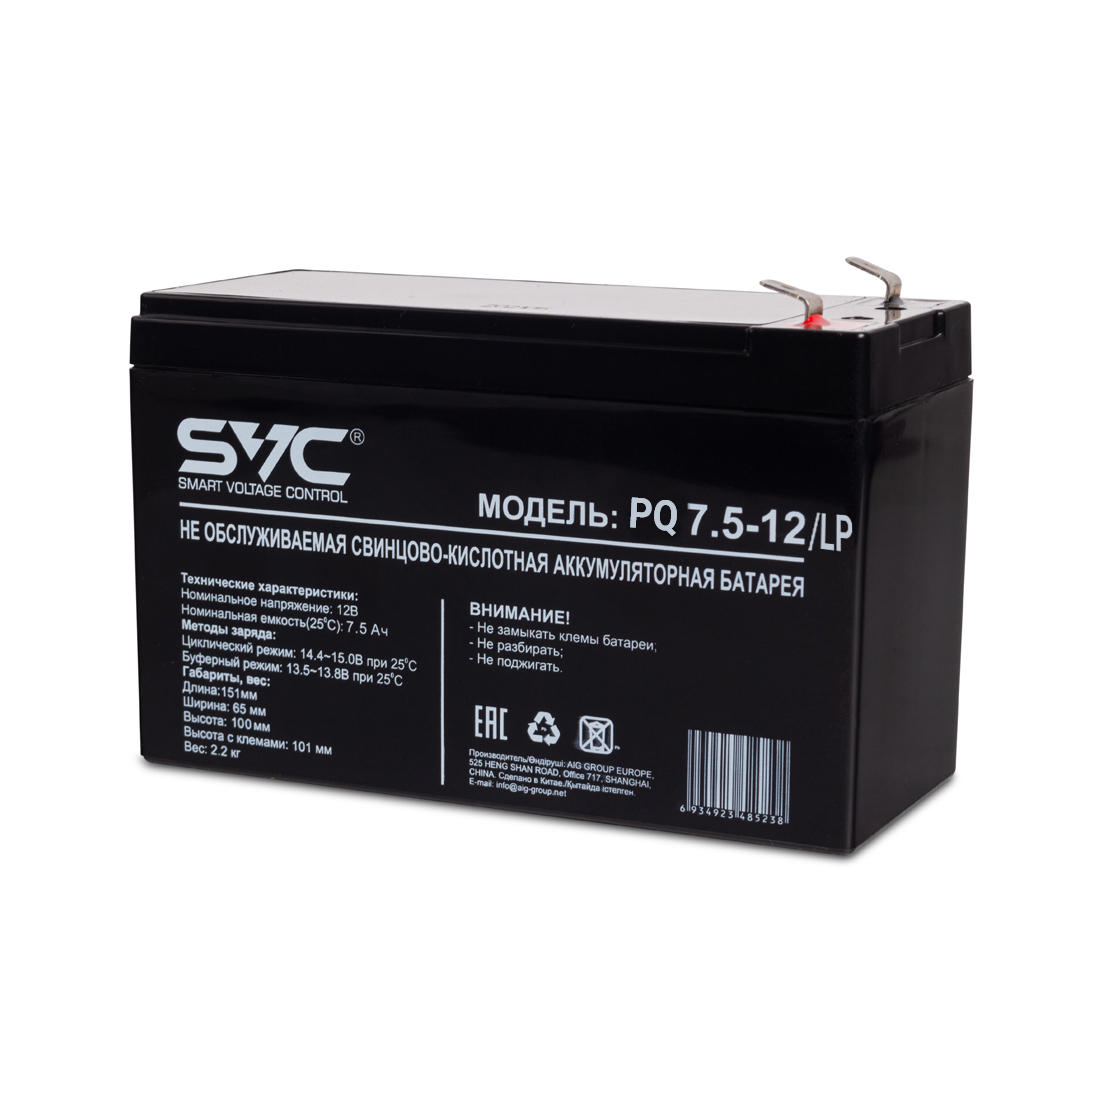 Аккумуляторная батарея SVC PQ7.5-12/LP 12В 7.5 Ач / 2.35 кг, 151 x 65 x 95 мм